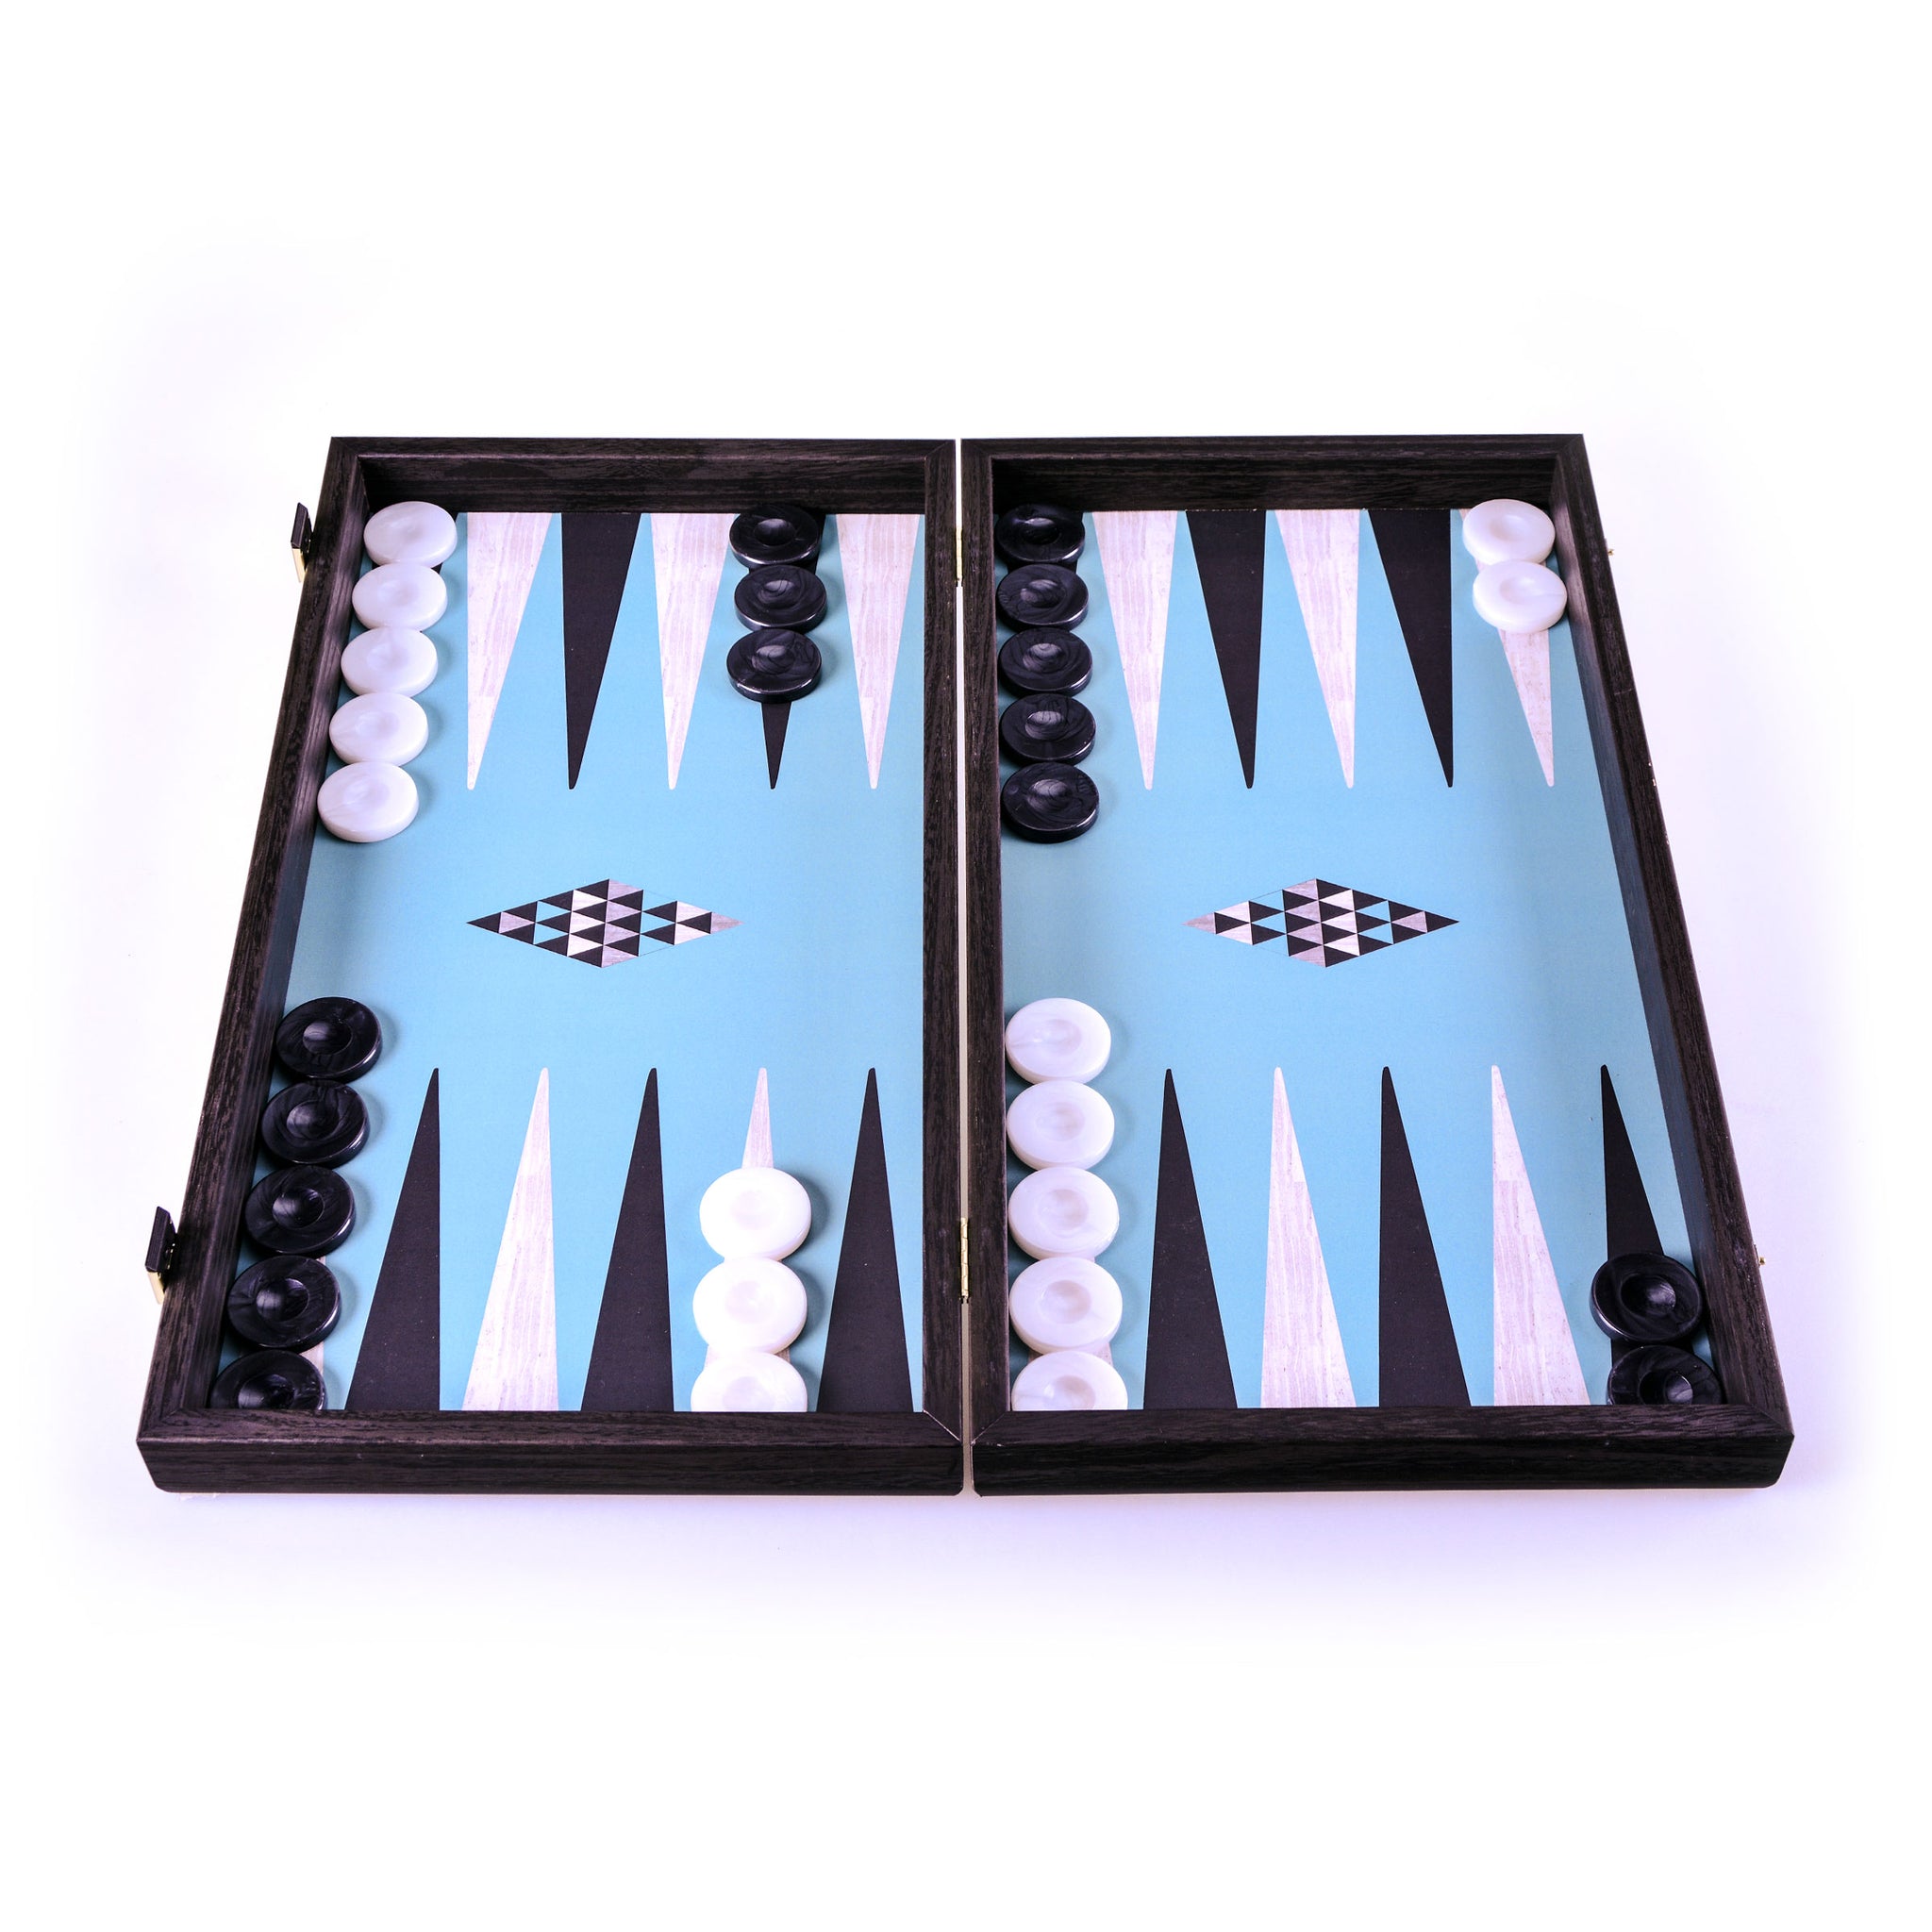 Backgammon Arena free download